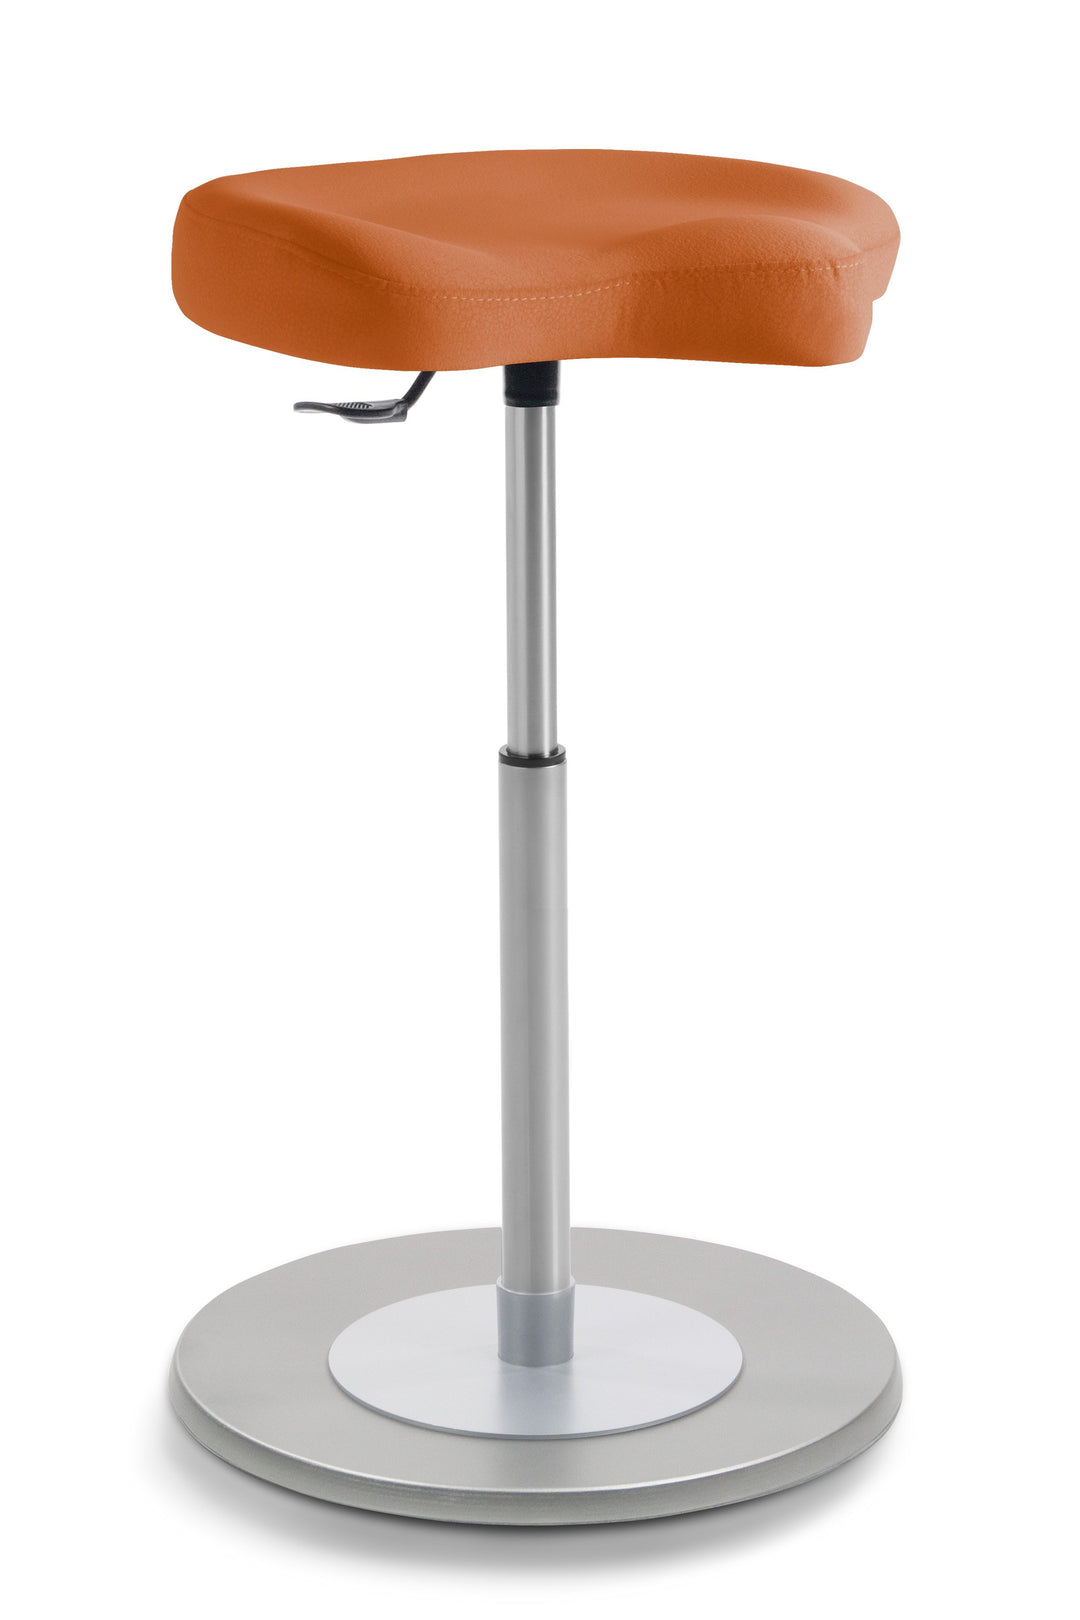 Mayer MyErgosit Taboret Krzesło Stołek balansujący ergonomiczny 54-79cm podstawa srebrna 1168 EF